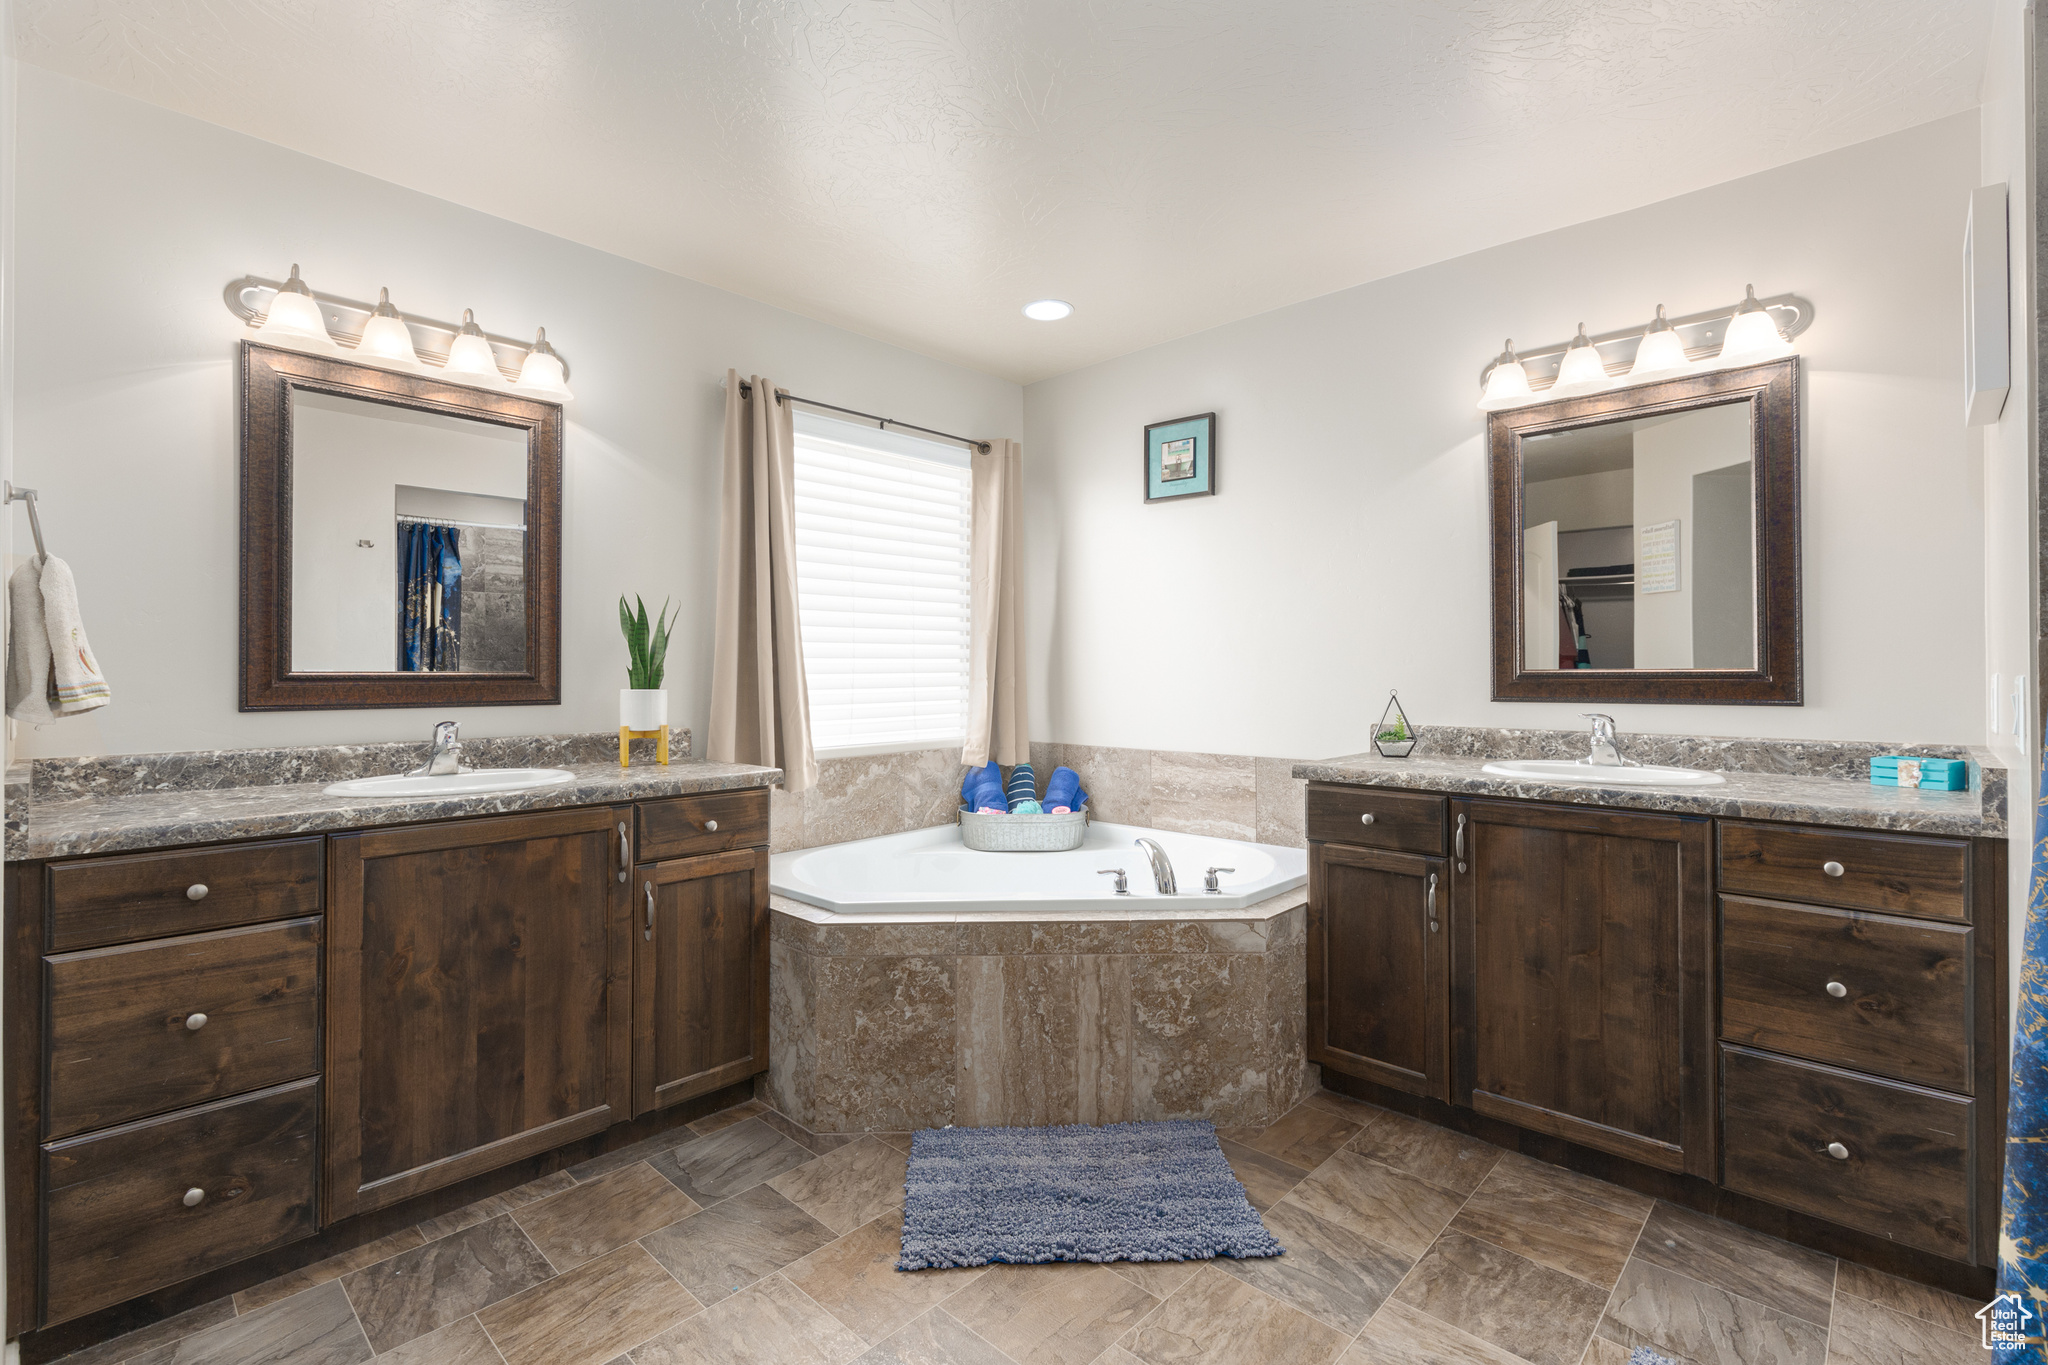 Bathroom featuring dual bowl vanity, tile floors, and tiled bath